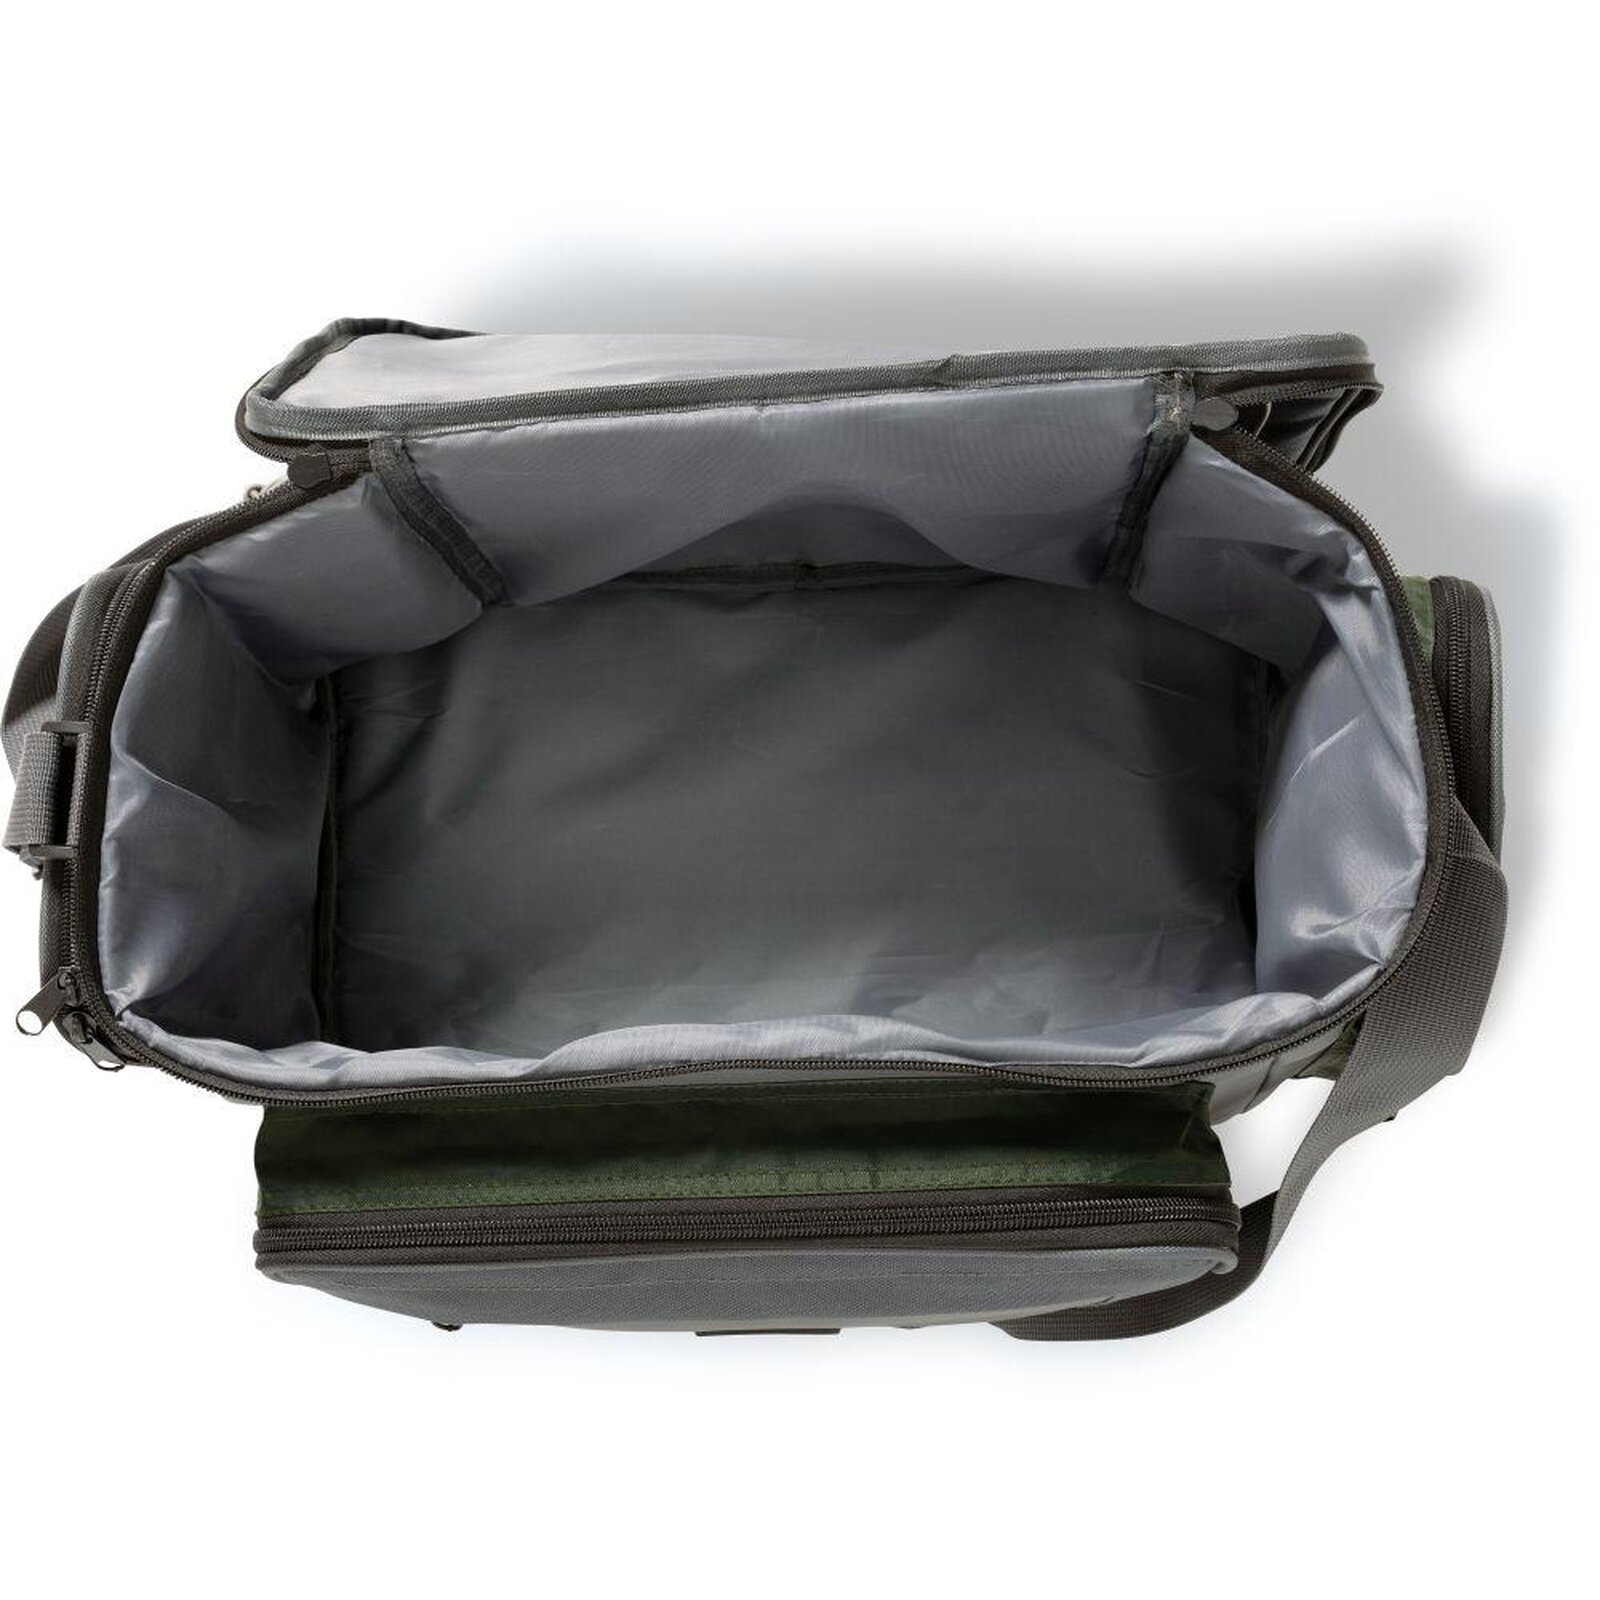 Zebco Tackle Bag grn/grau